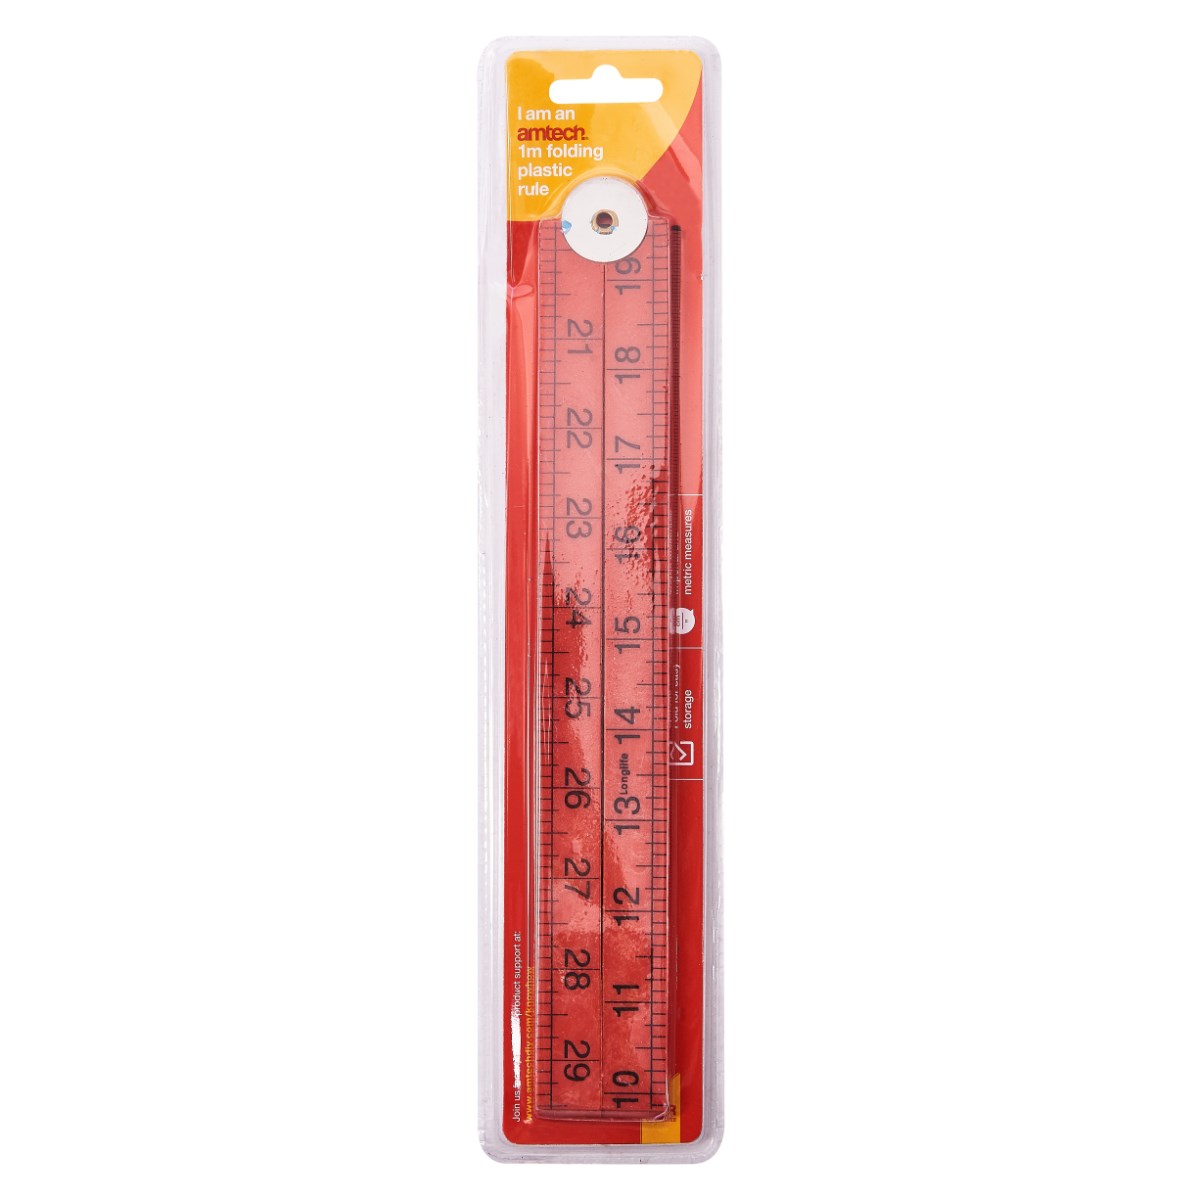 Amtech P5185 Measuring Ruler 1m Folding Plastic Metric Imperial Marking Yard 